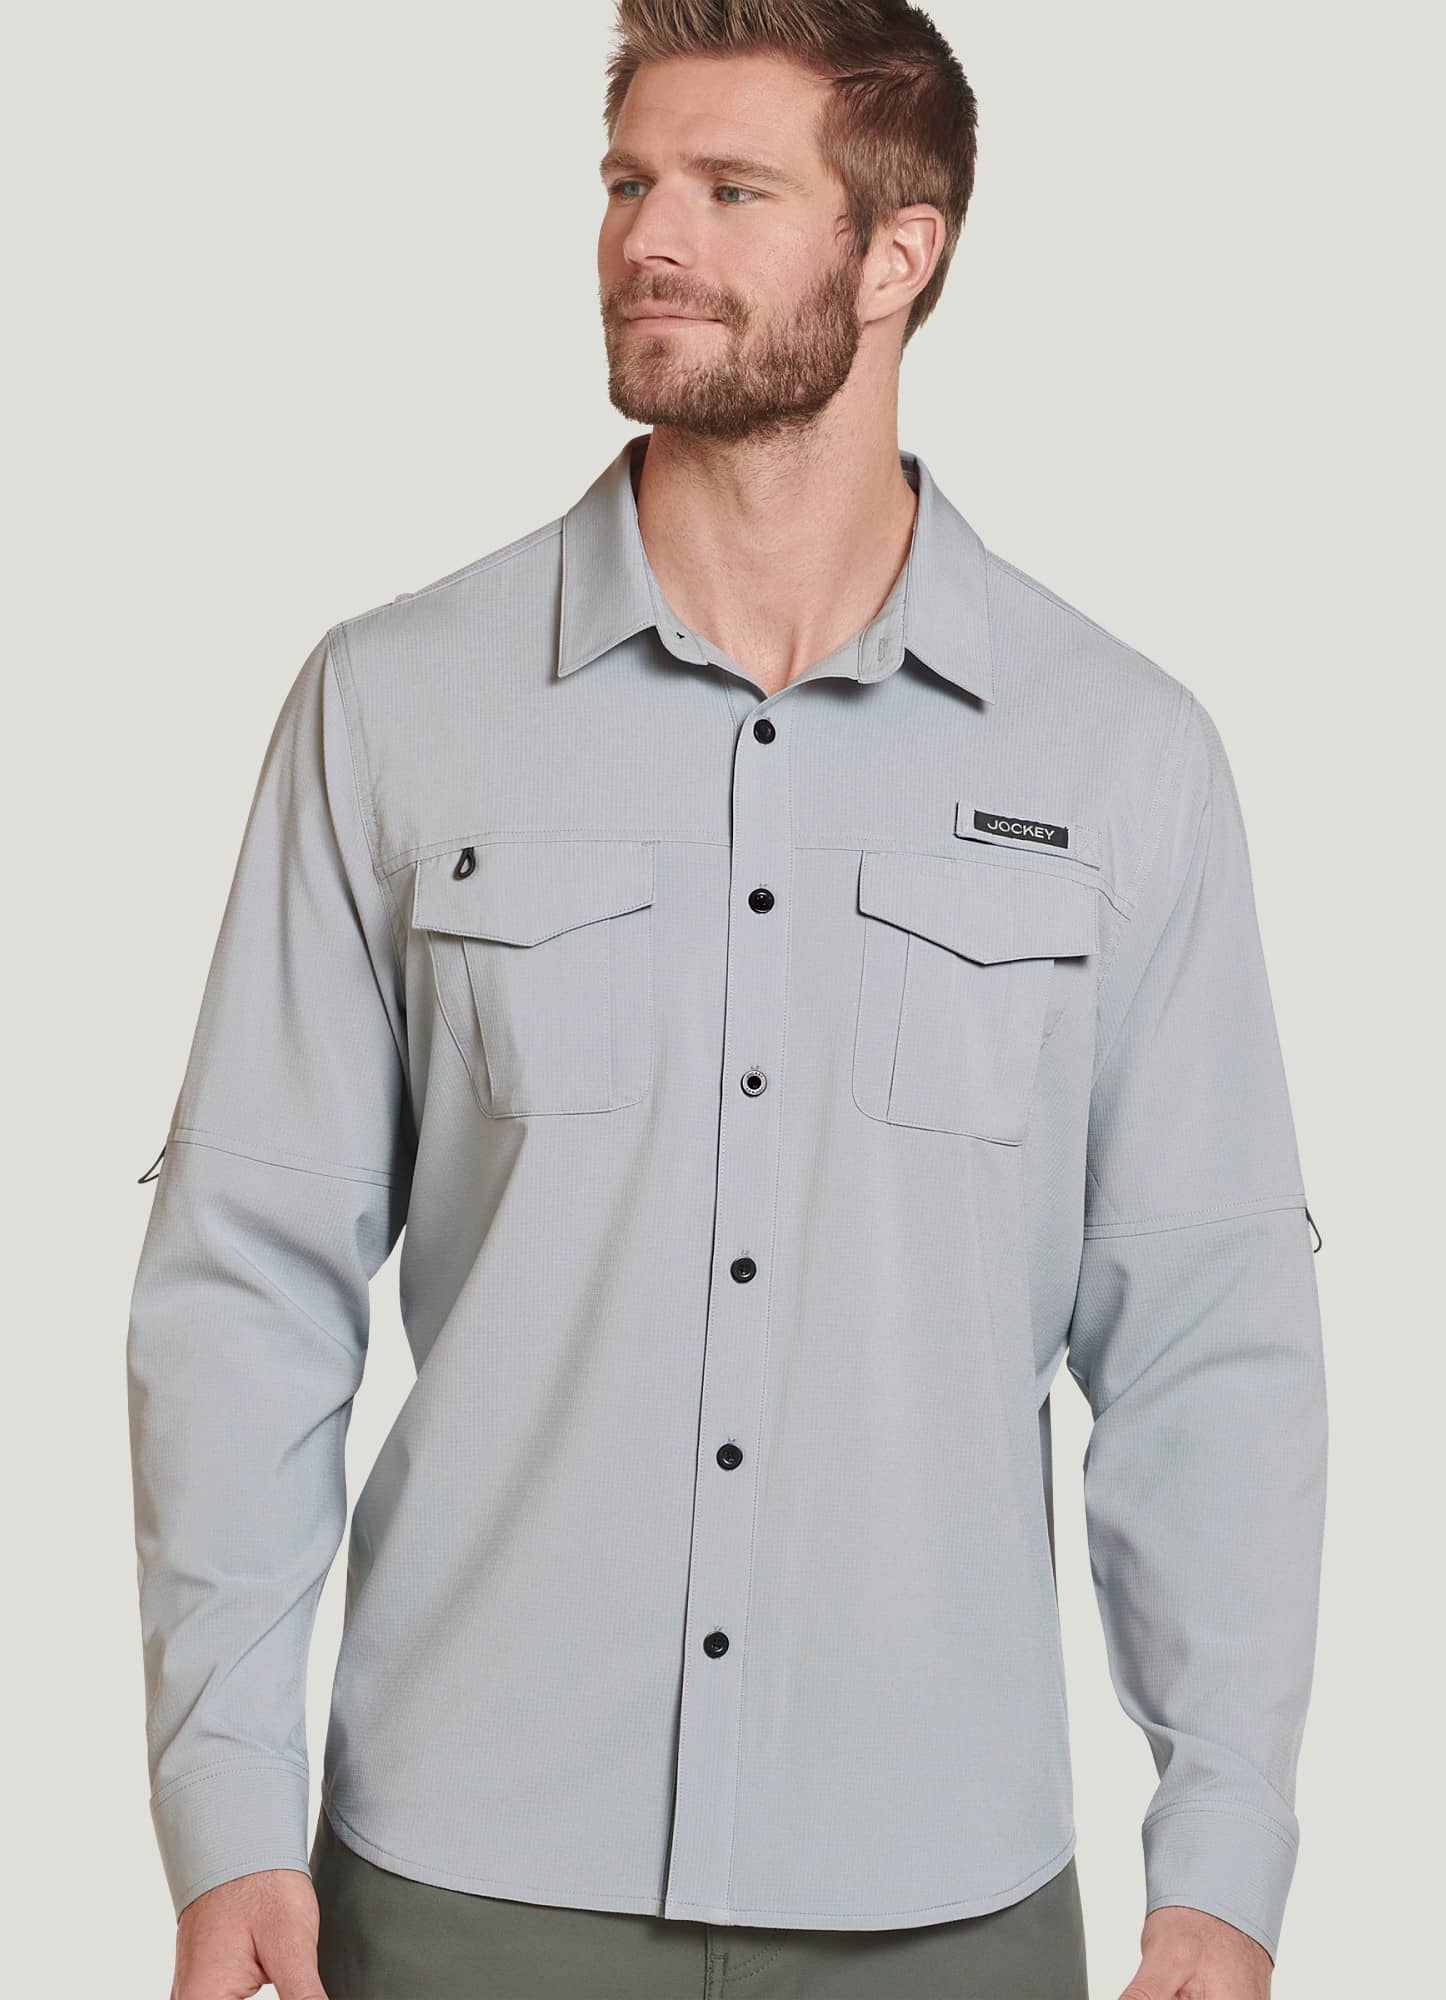 Jockey Men's Outdoors Long Sleeve Fishing Shirt XL Grey Agate